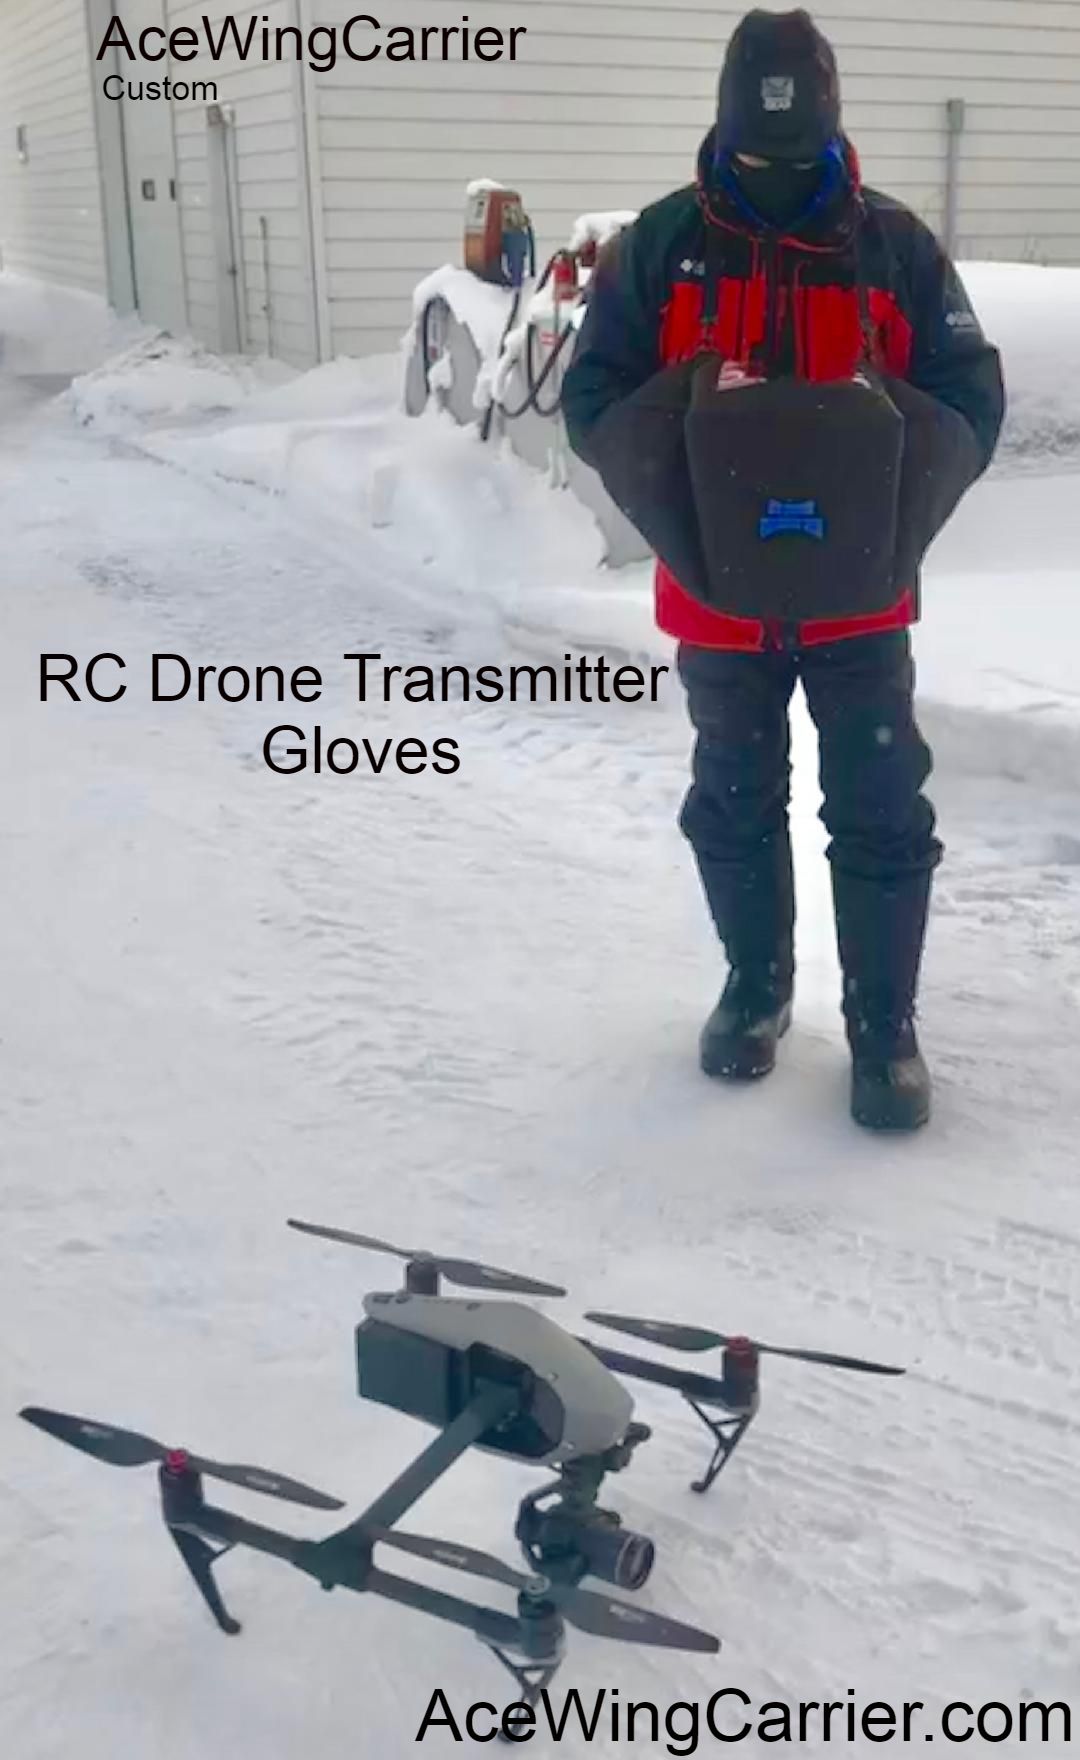 RC DJI Transmitter Glove by AceWingCarrier.com